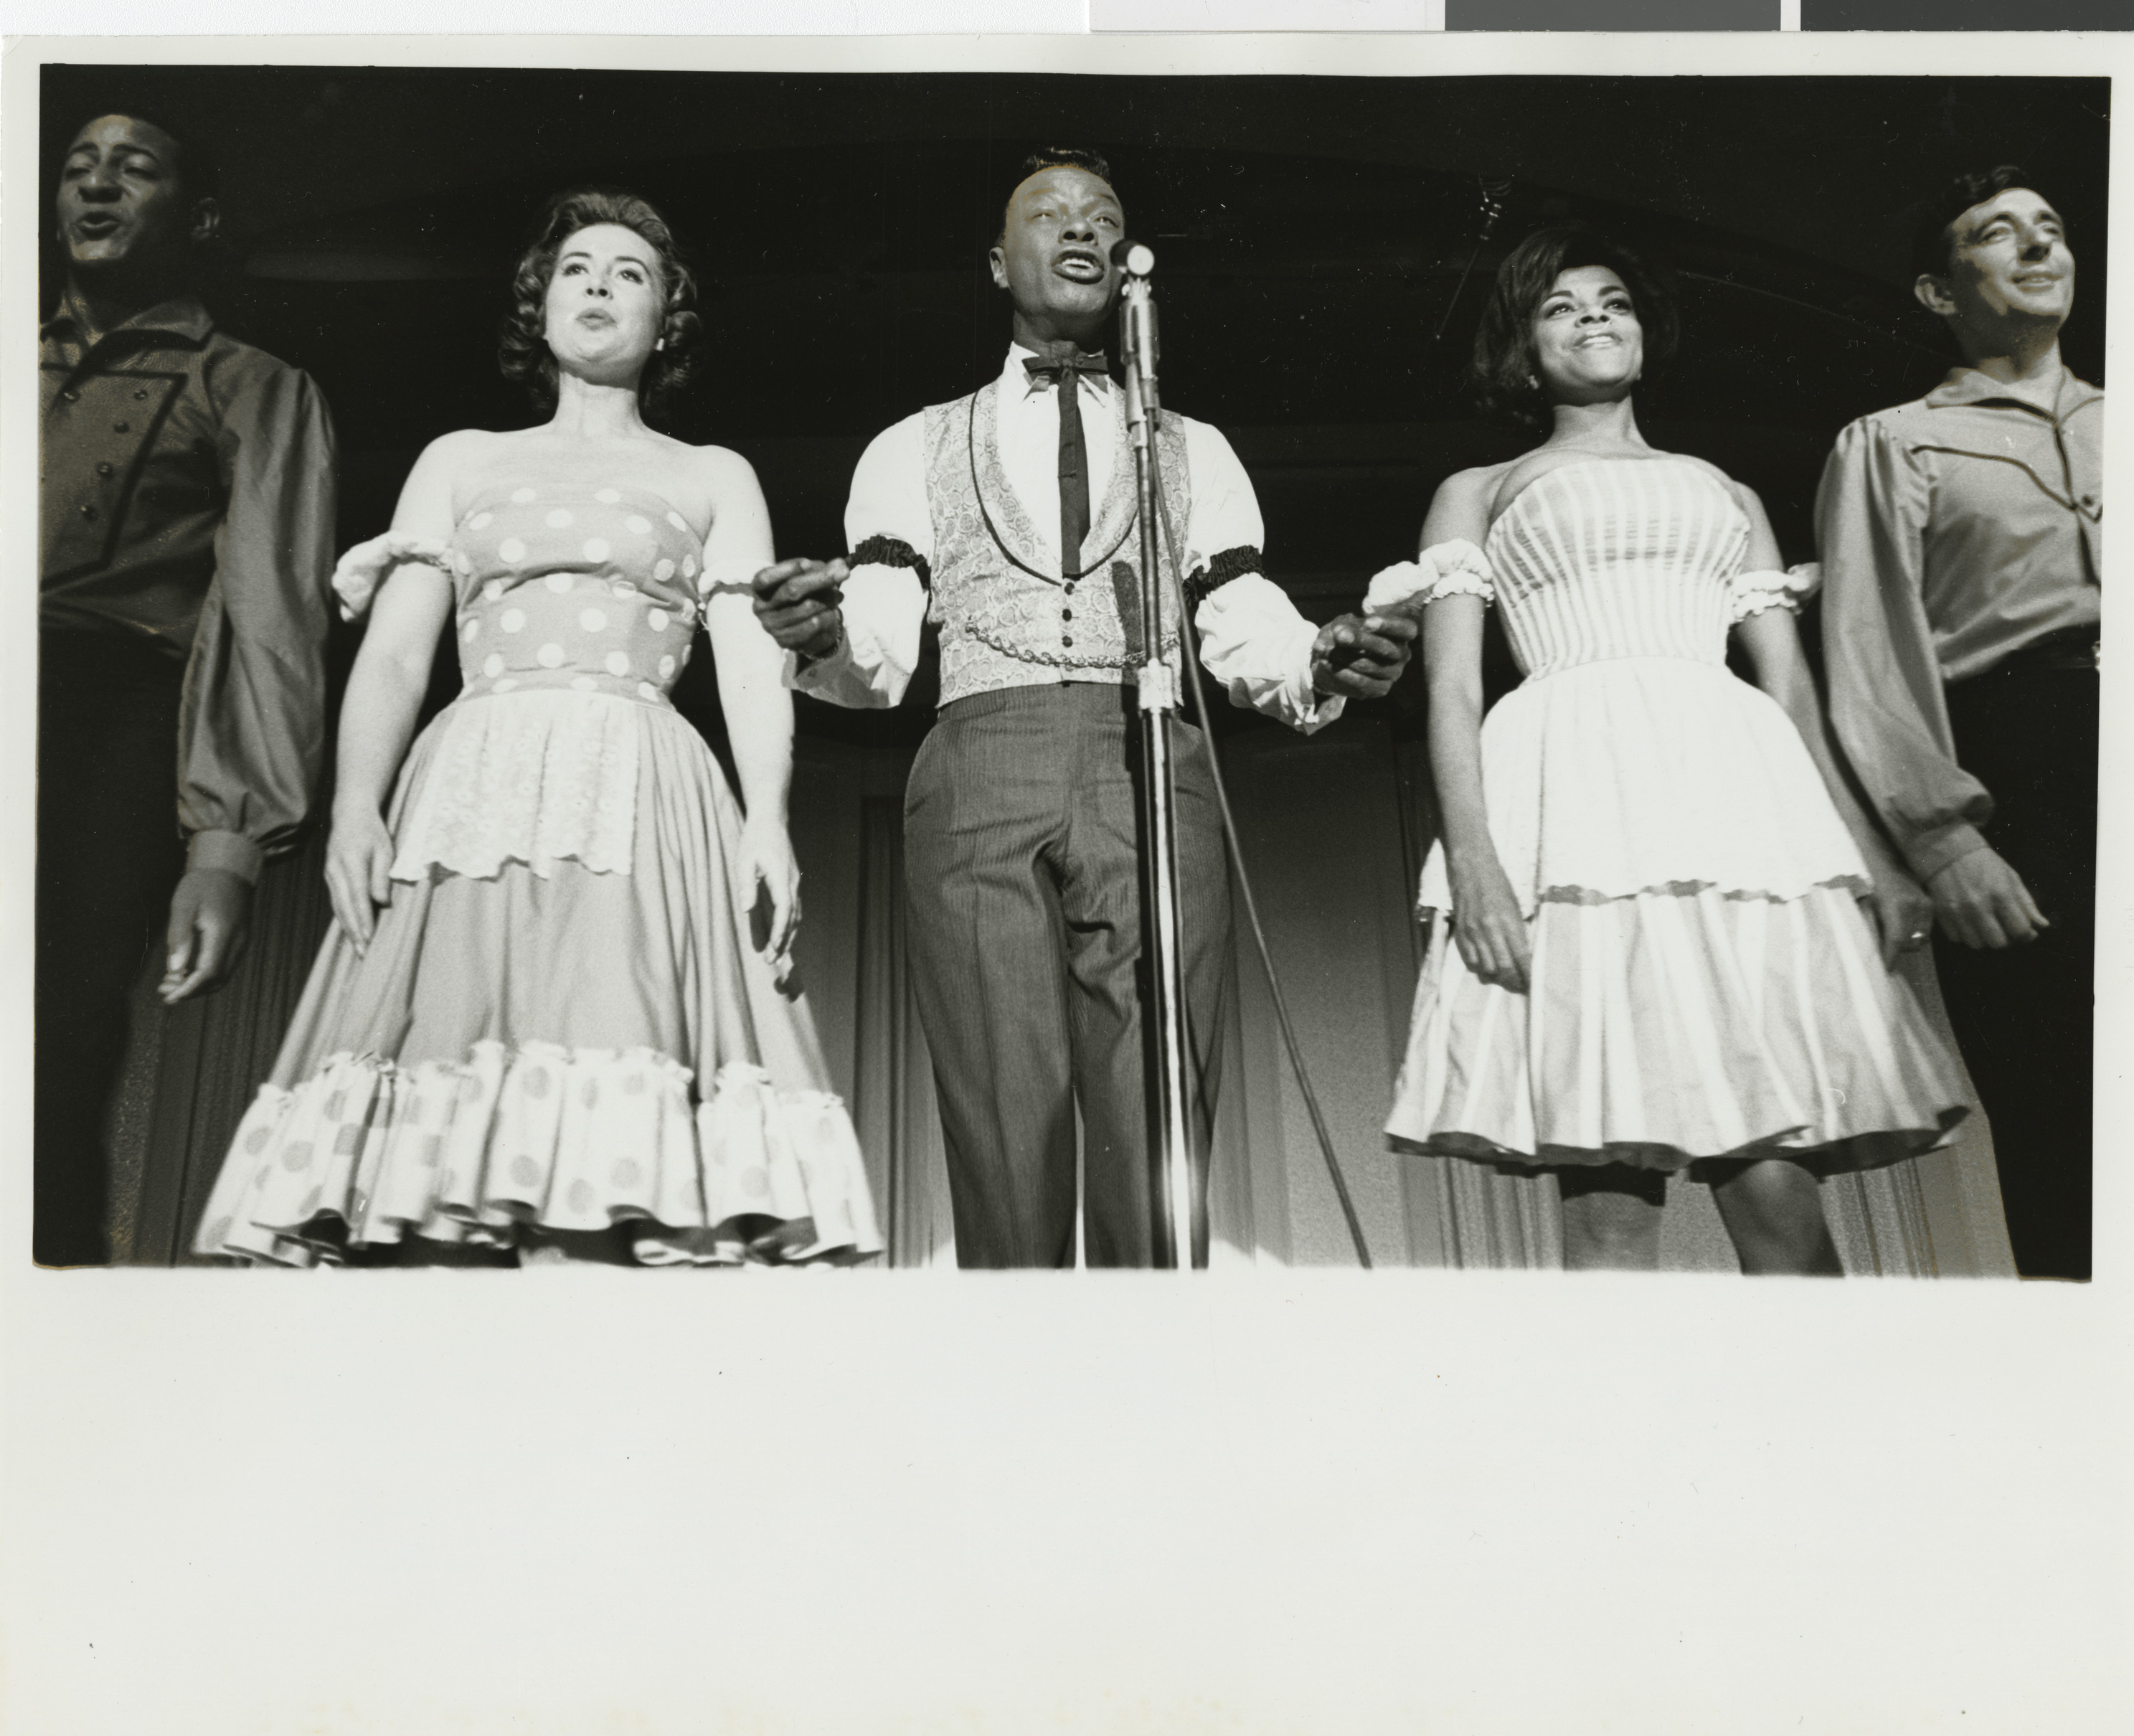 Nat King Cole on stage, Image 05